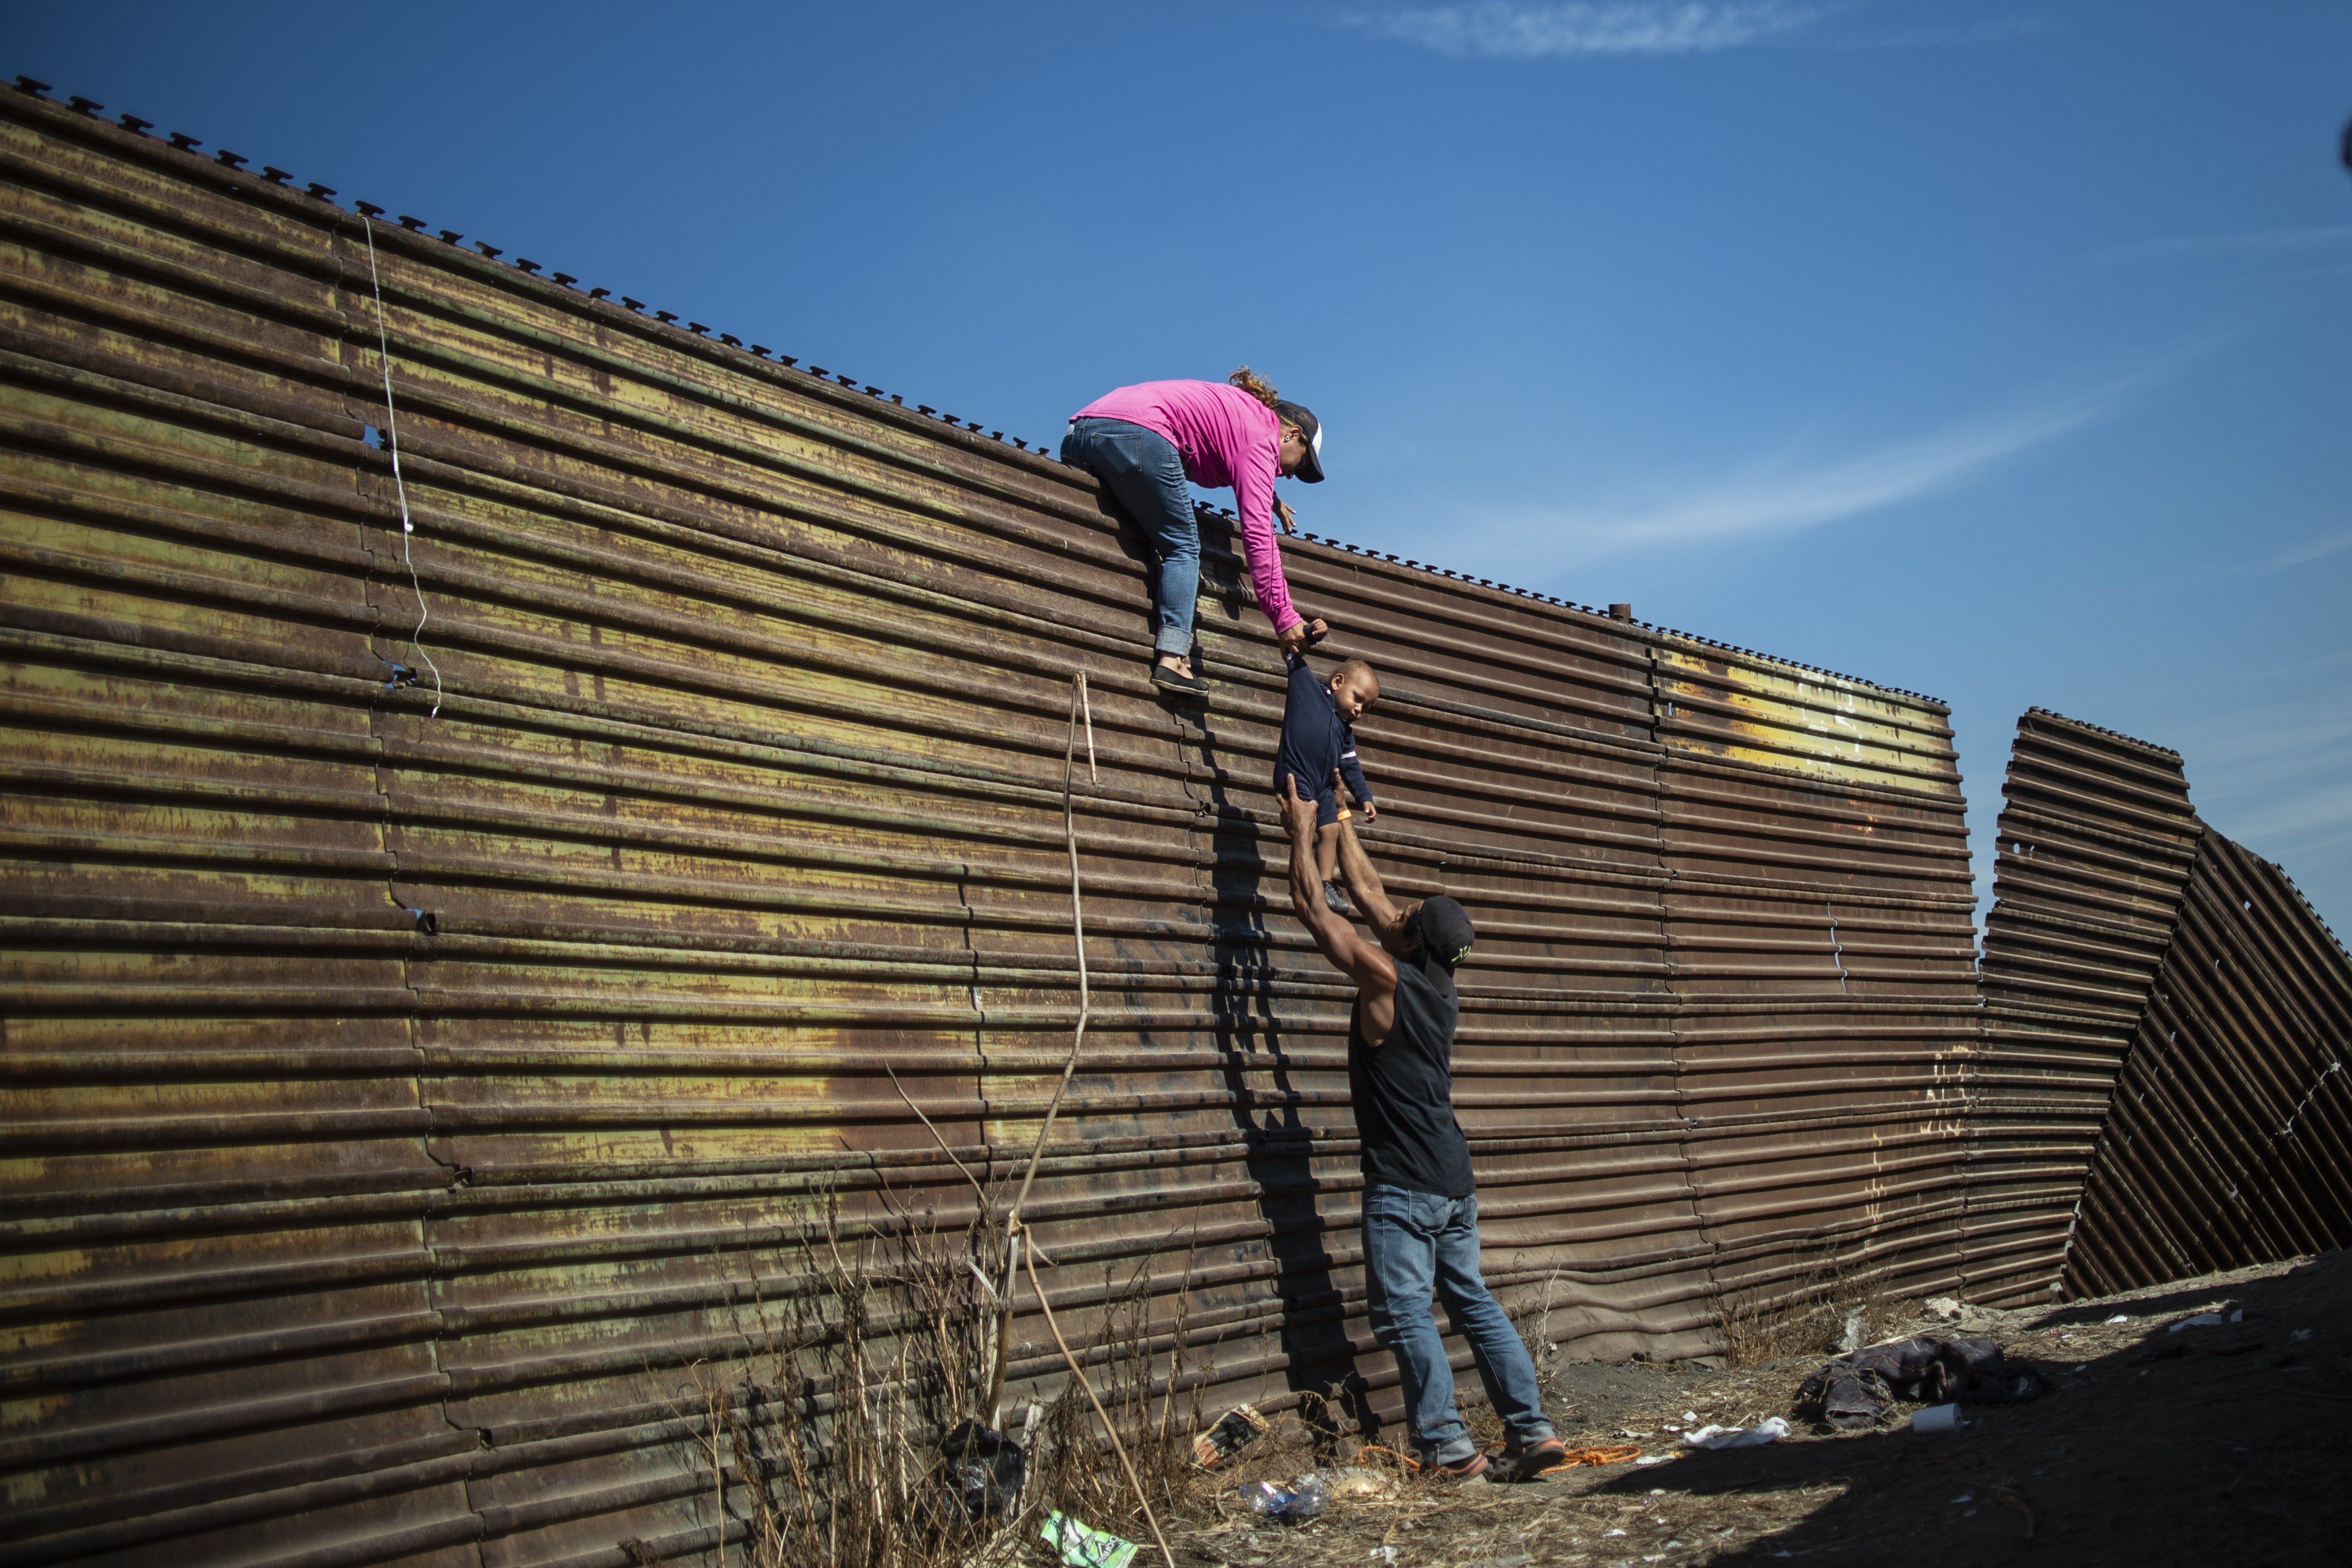 World Press Photo - Climbing the Border Fence